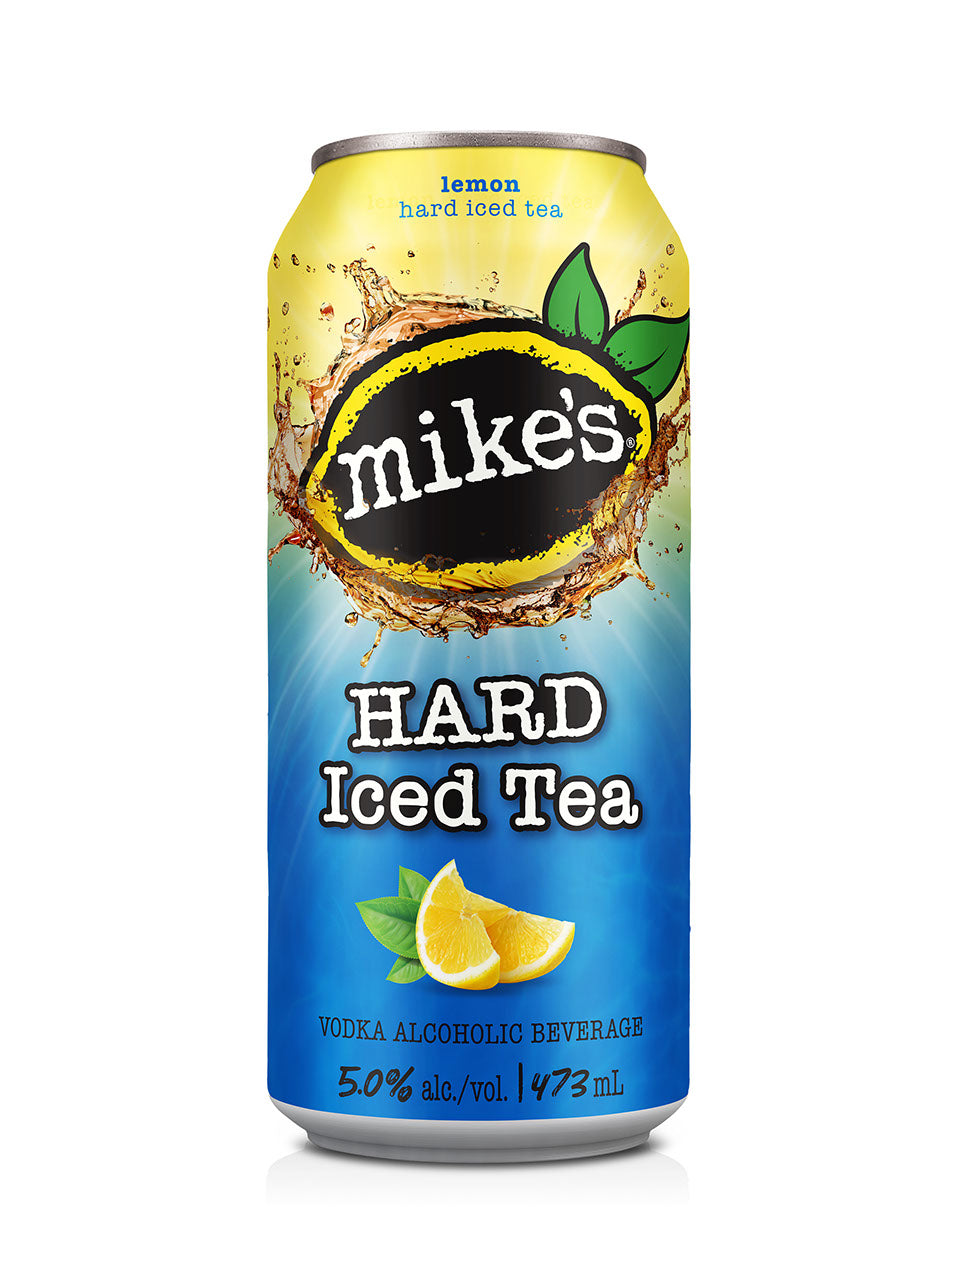 Mikes Hard Tea 473 ml can